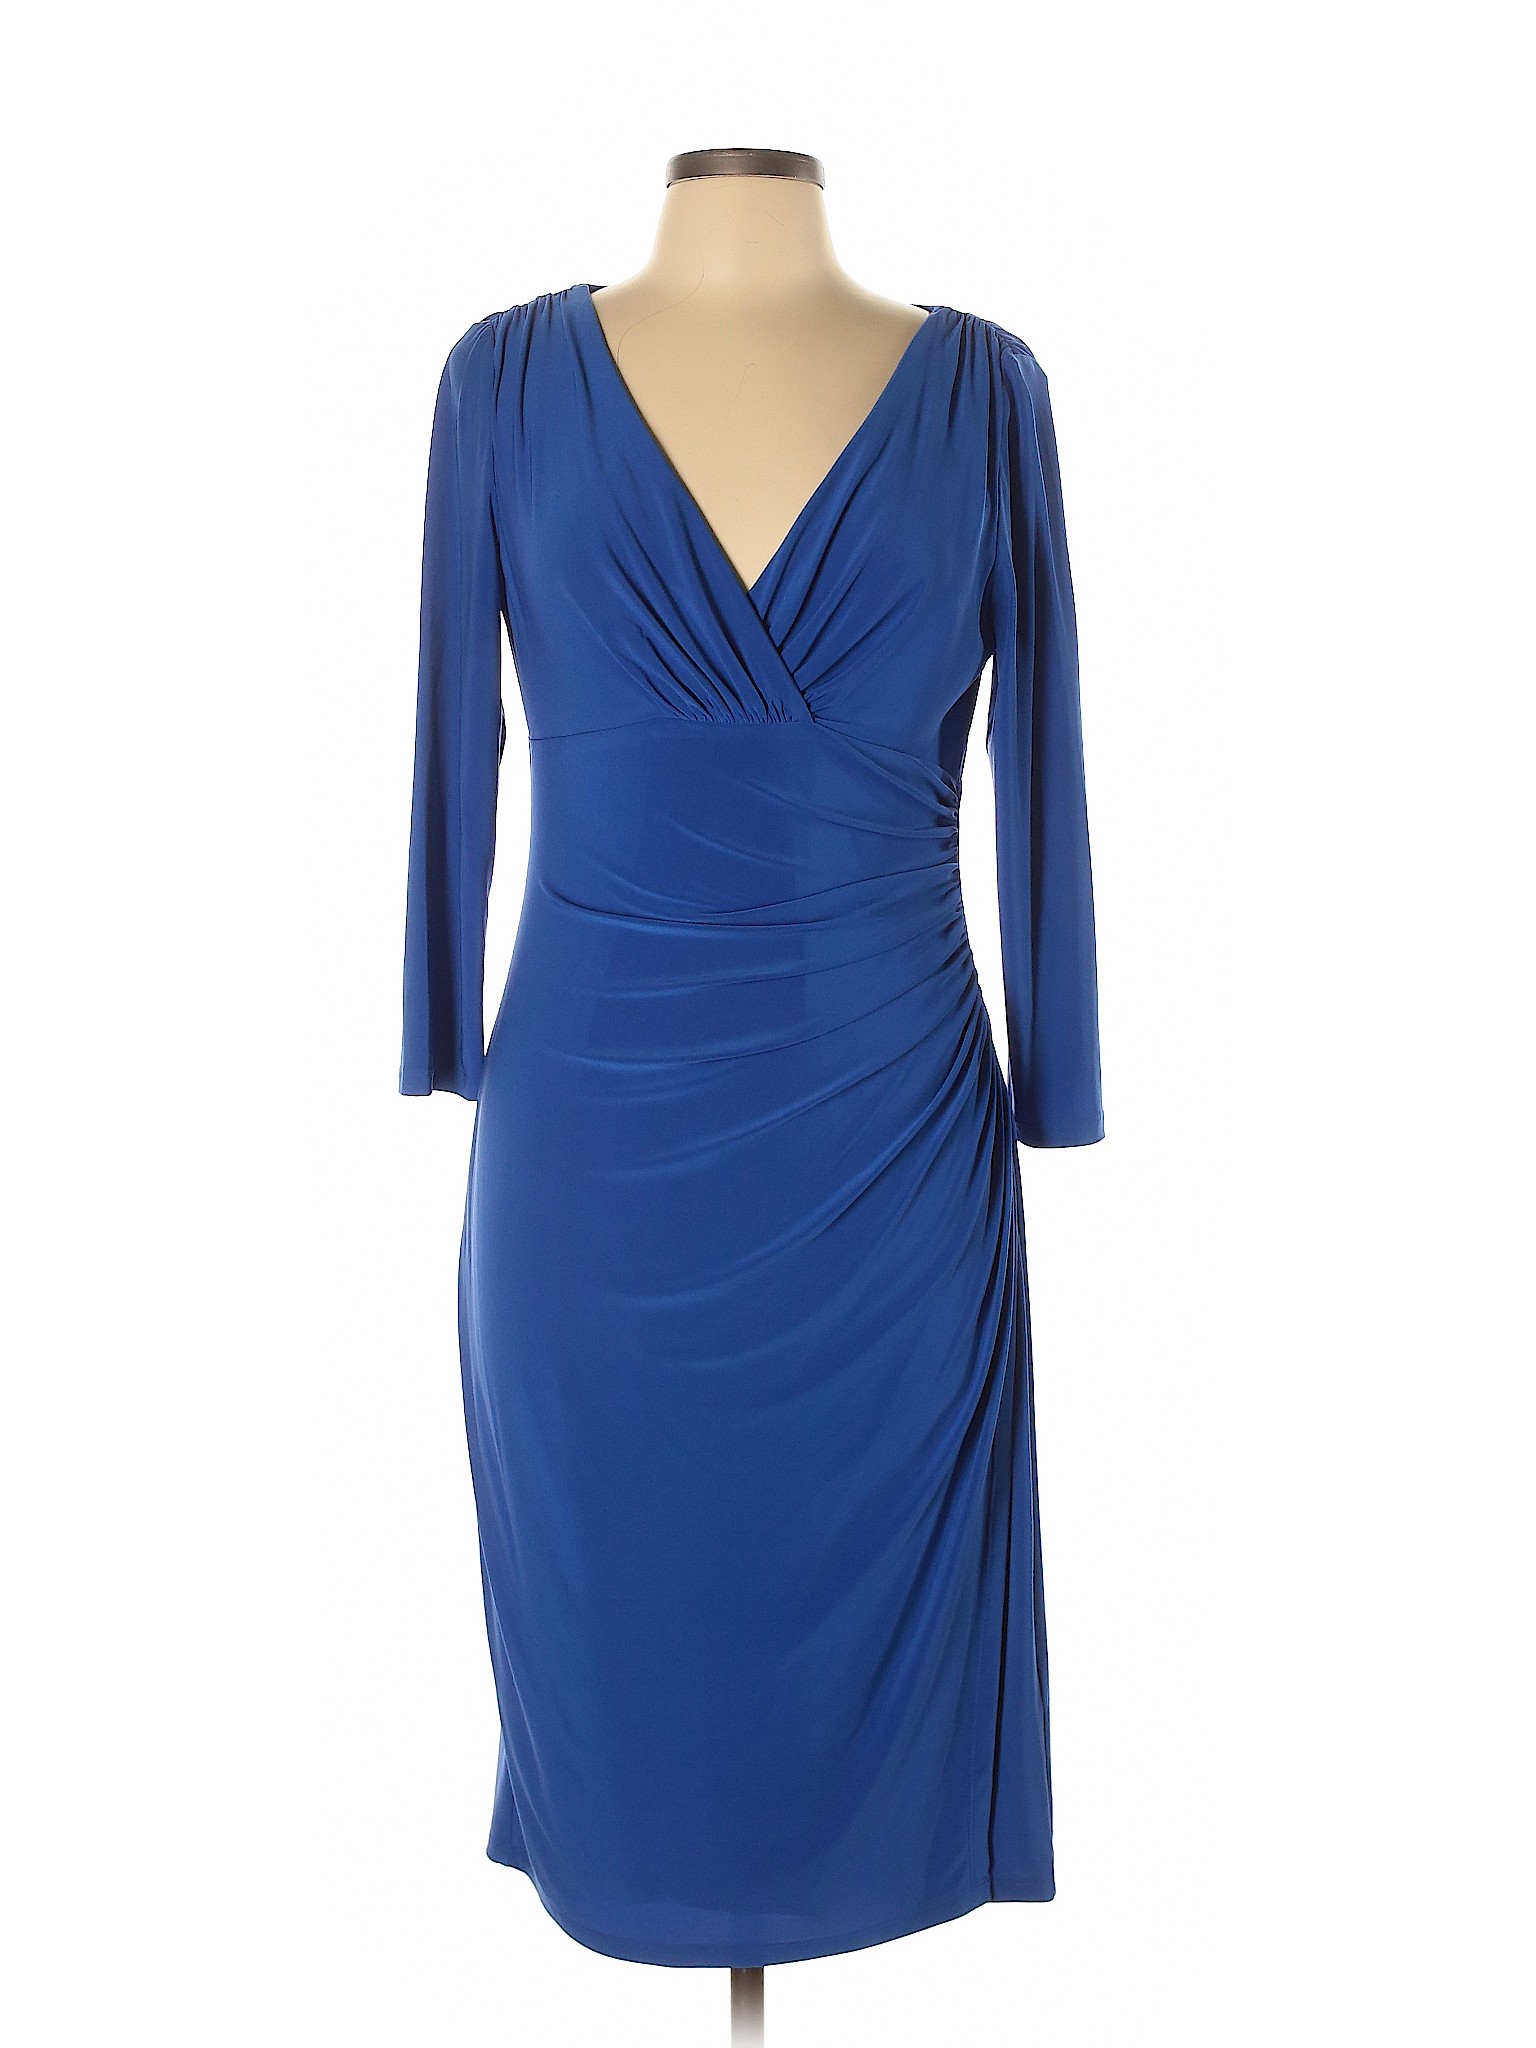 Lauren by Ralph Lauren Women Blue Cocktail Dress 10 | eBay